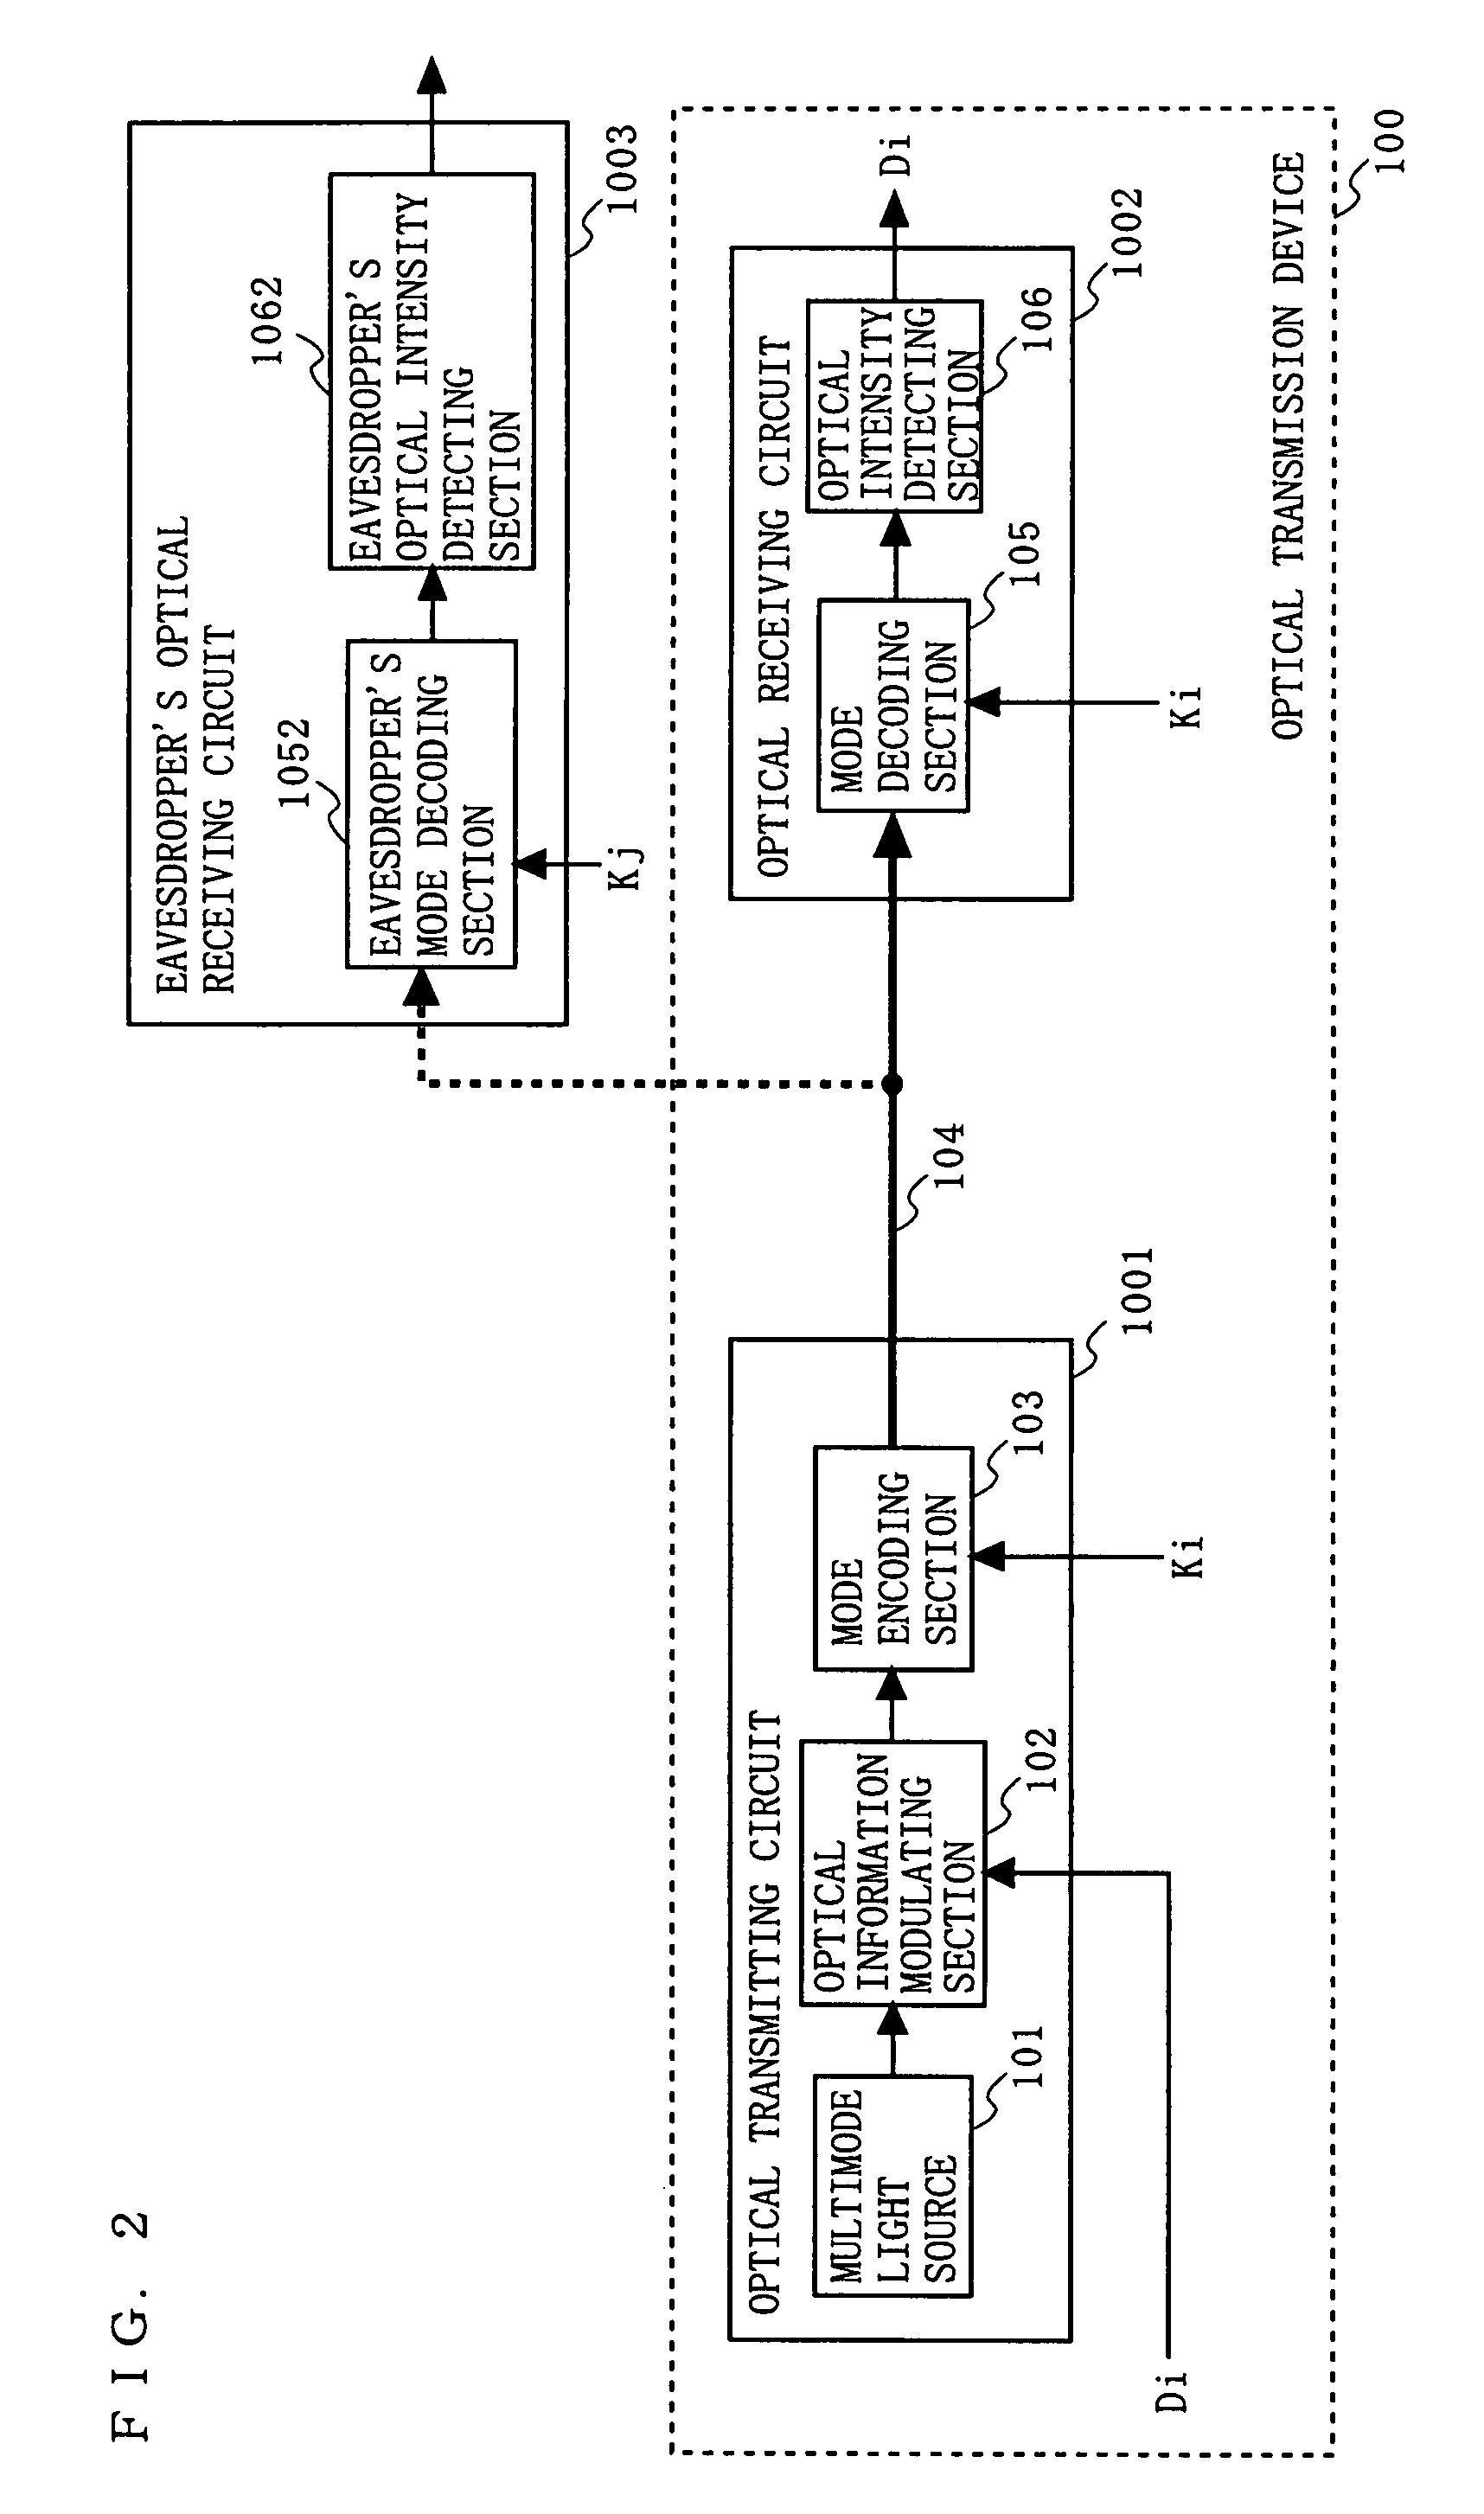 Multimode optical transmission device